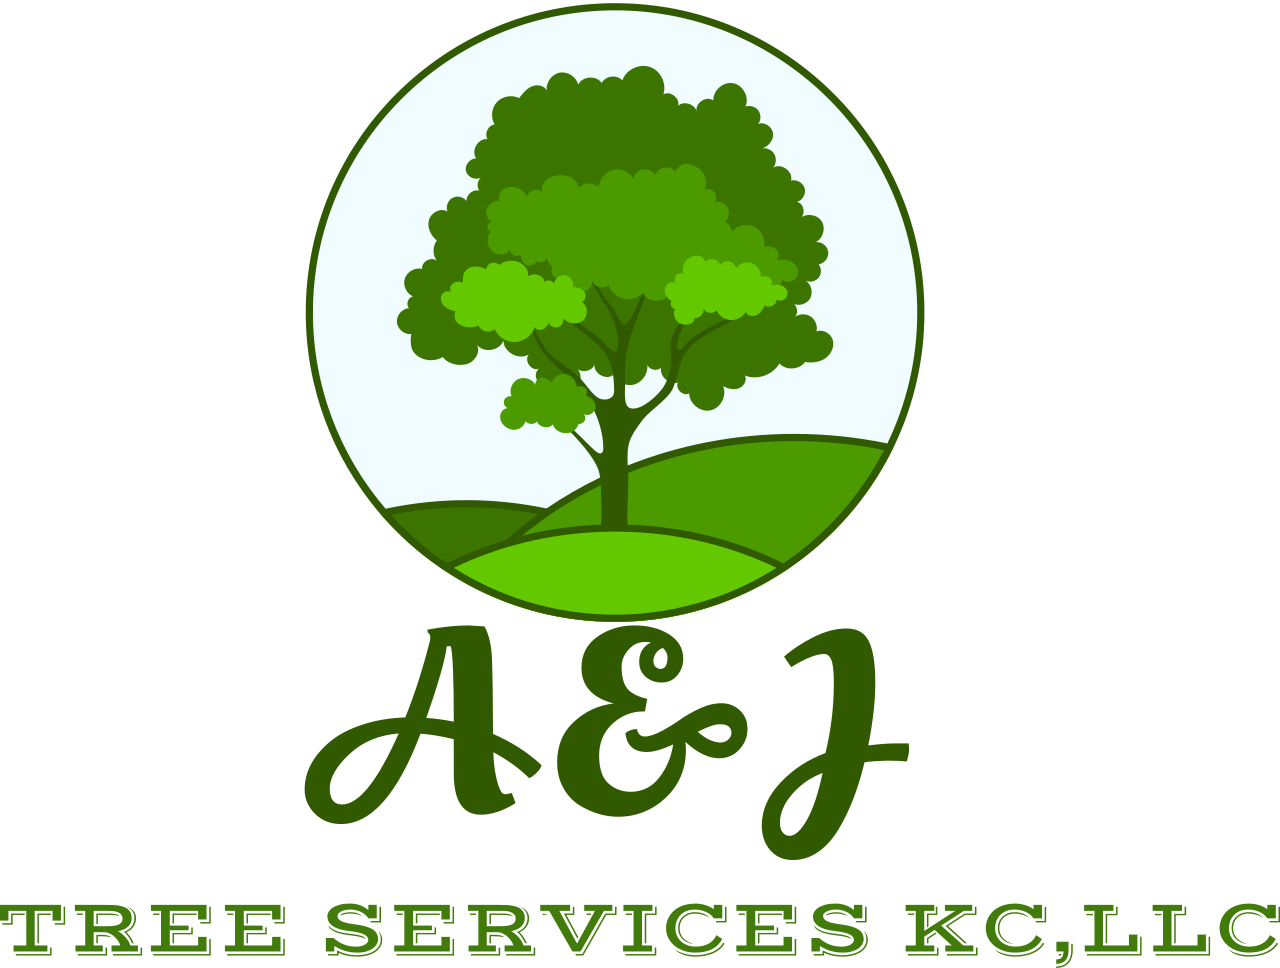 A&J TREE SERVICES KC, LLC 's web page